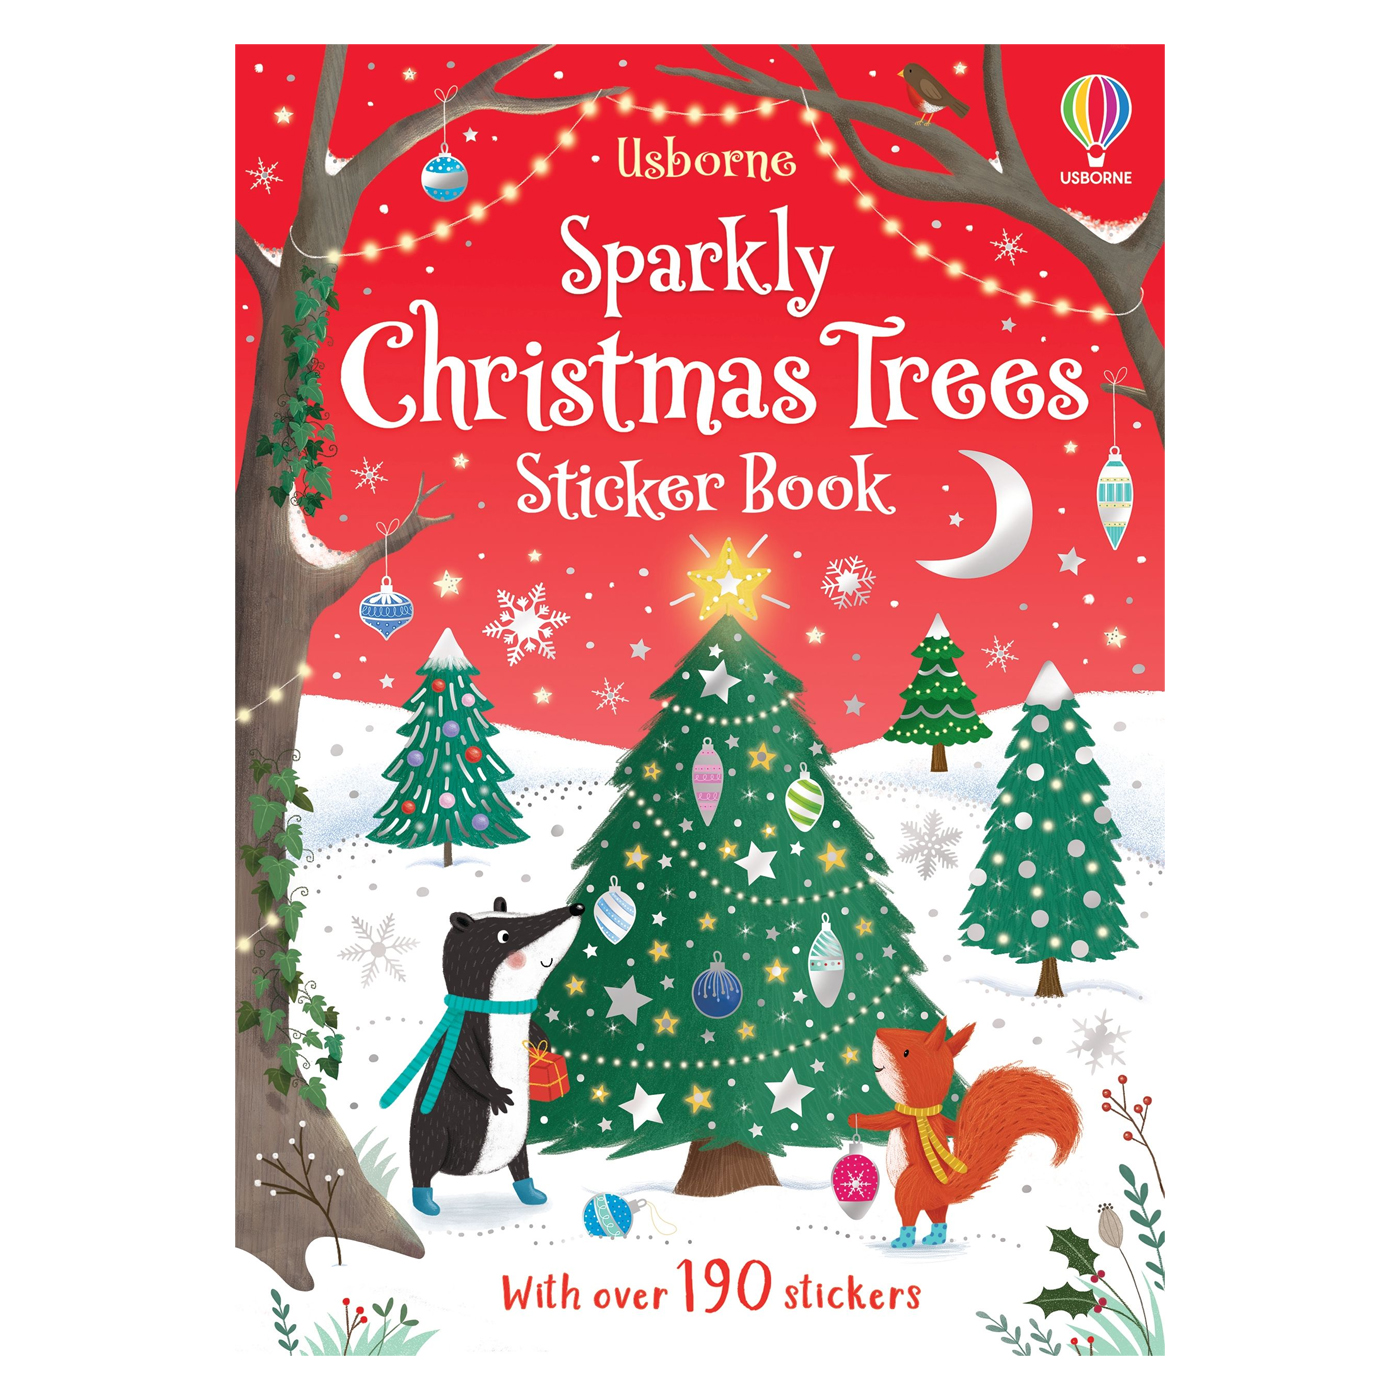  Sparkly Christmas Trees Sticker Book